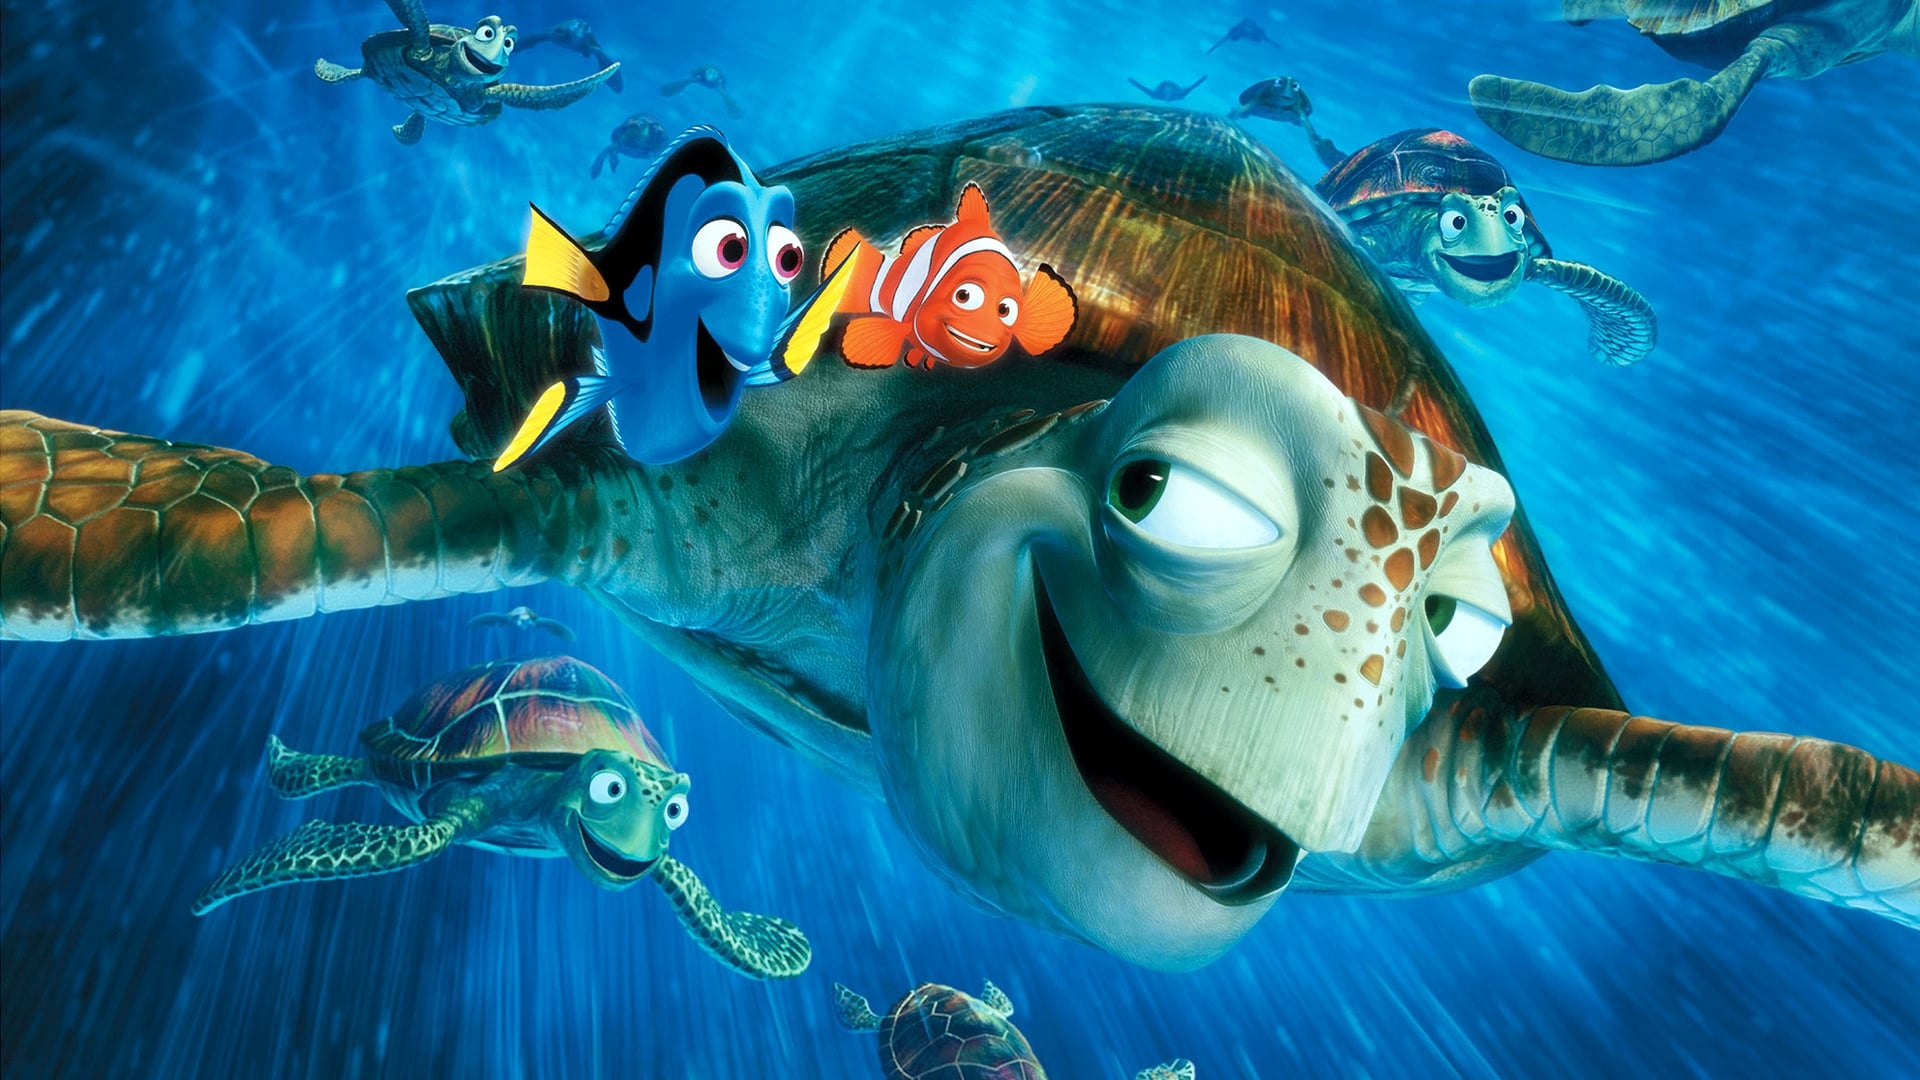 Poster Phim Đi tìm Nemo (Finding Nemo)